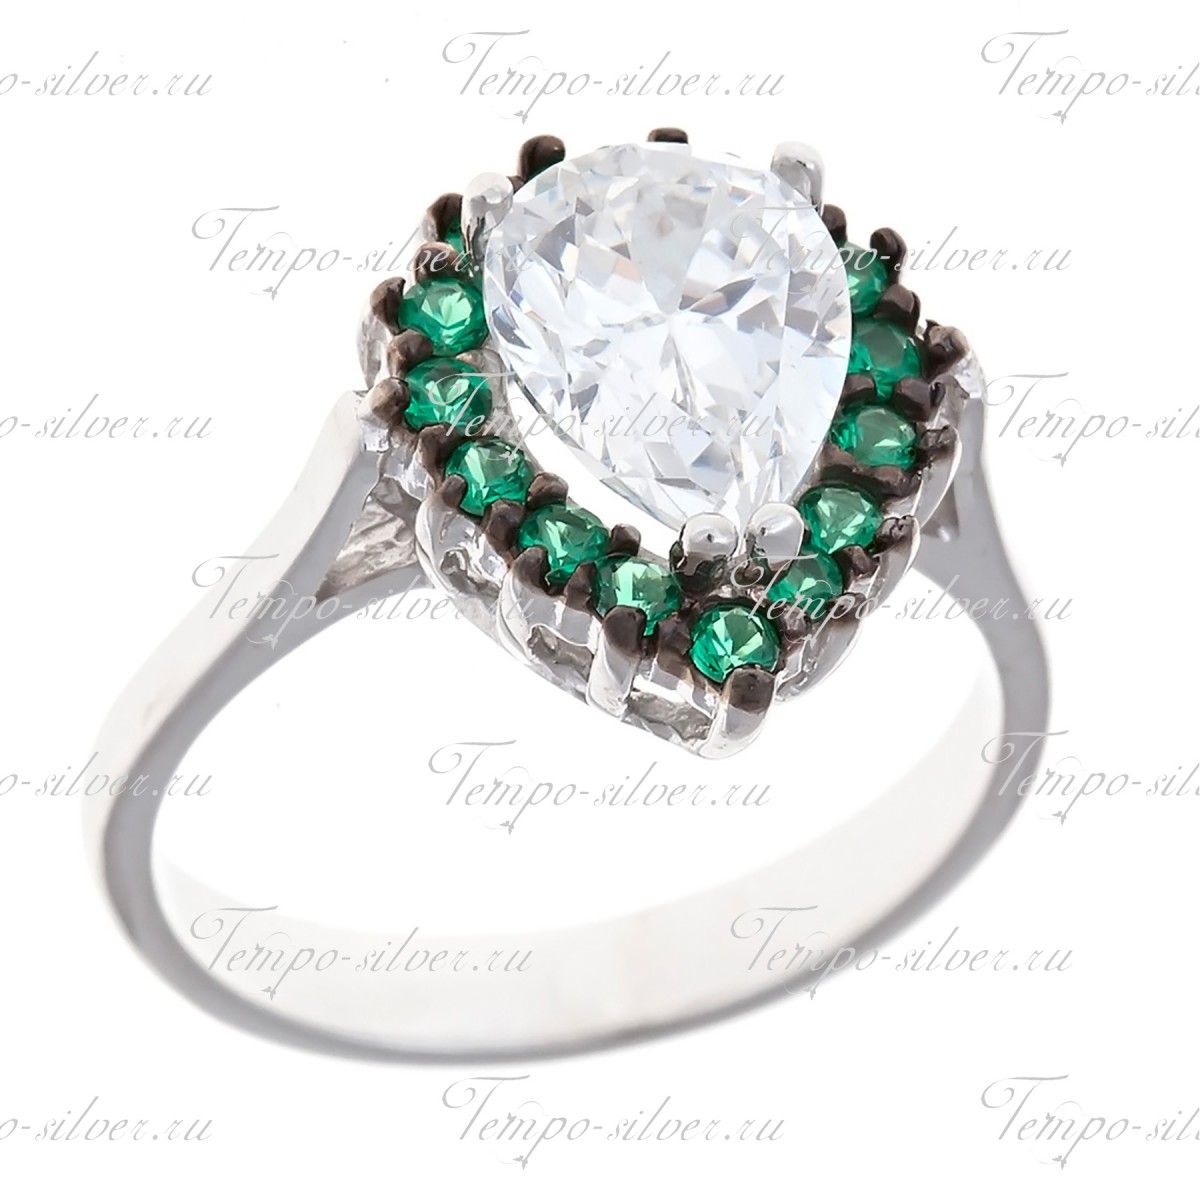 Кольцо в форме капли с зелеными камнями по контуру цена